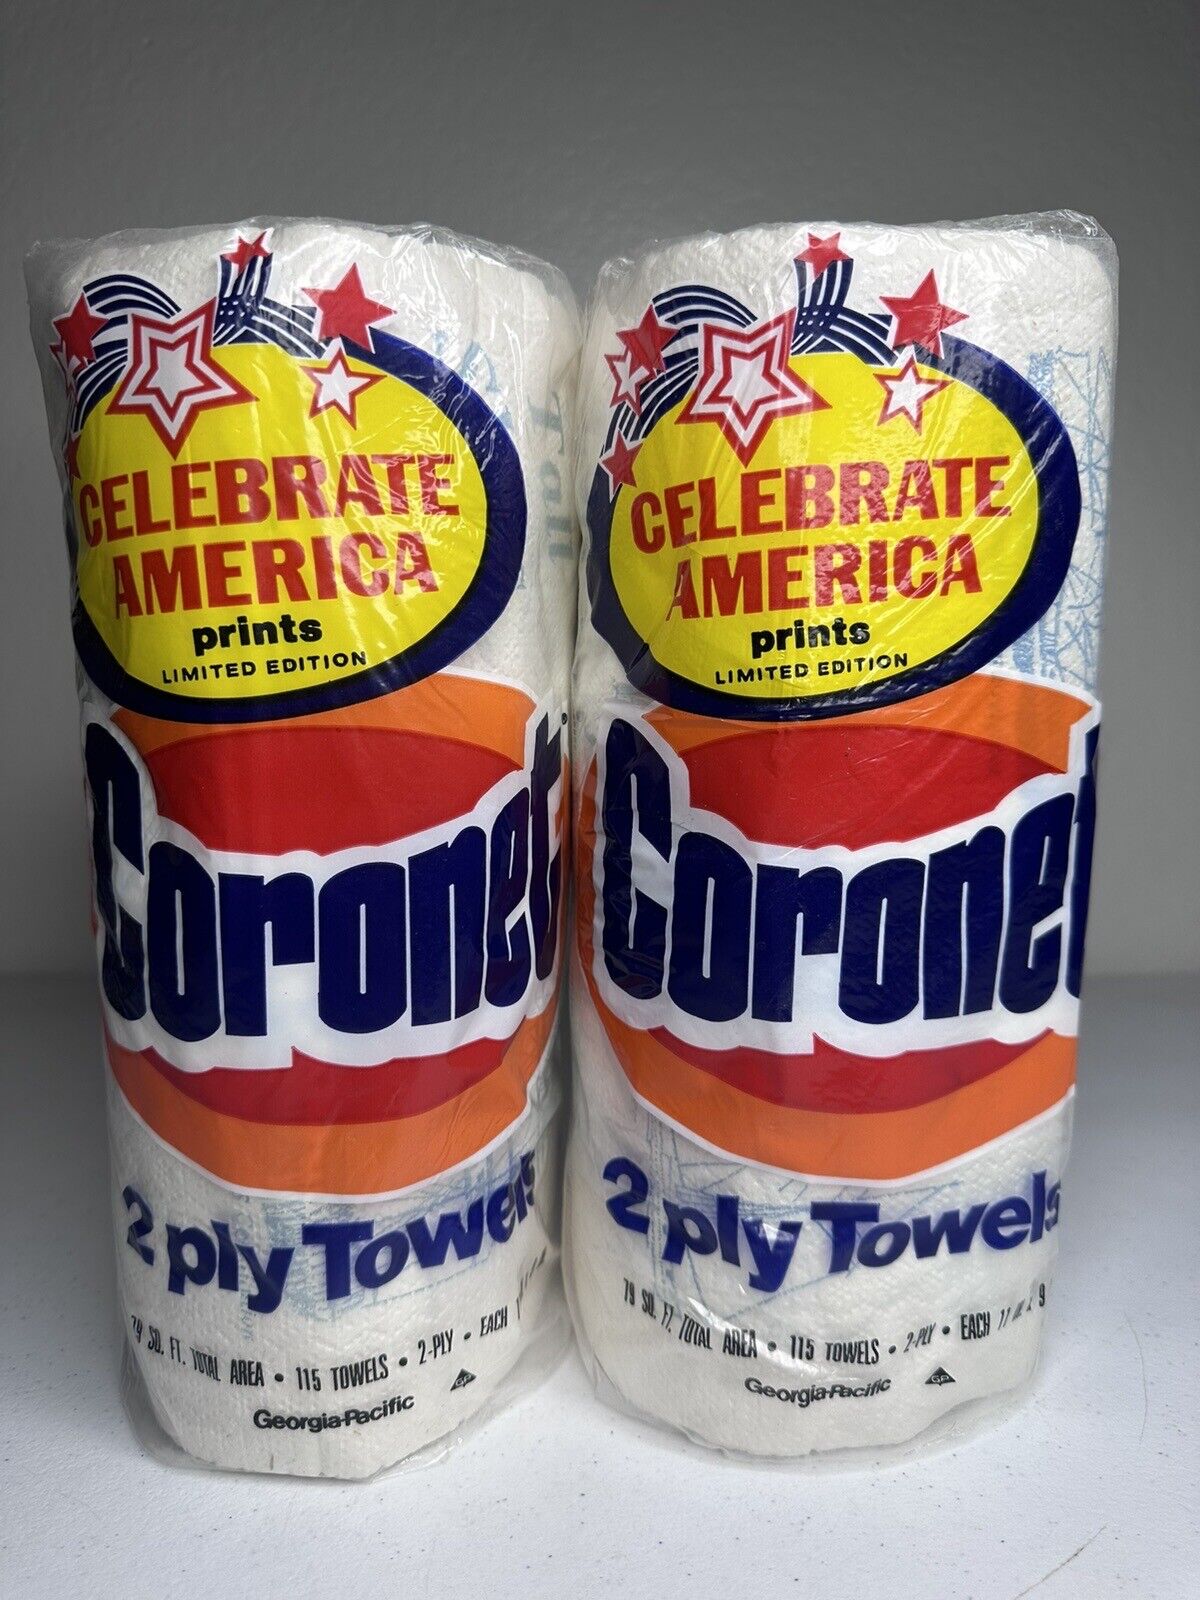 Vintage 1986 Coronet Celebrate America Prints Paper Towels - 2 Ply, 2 Rolls